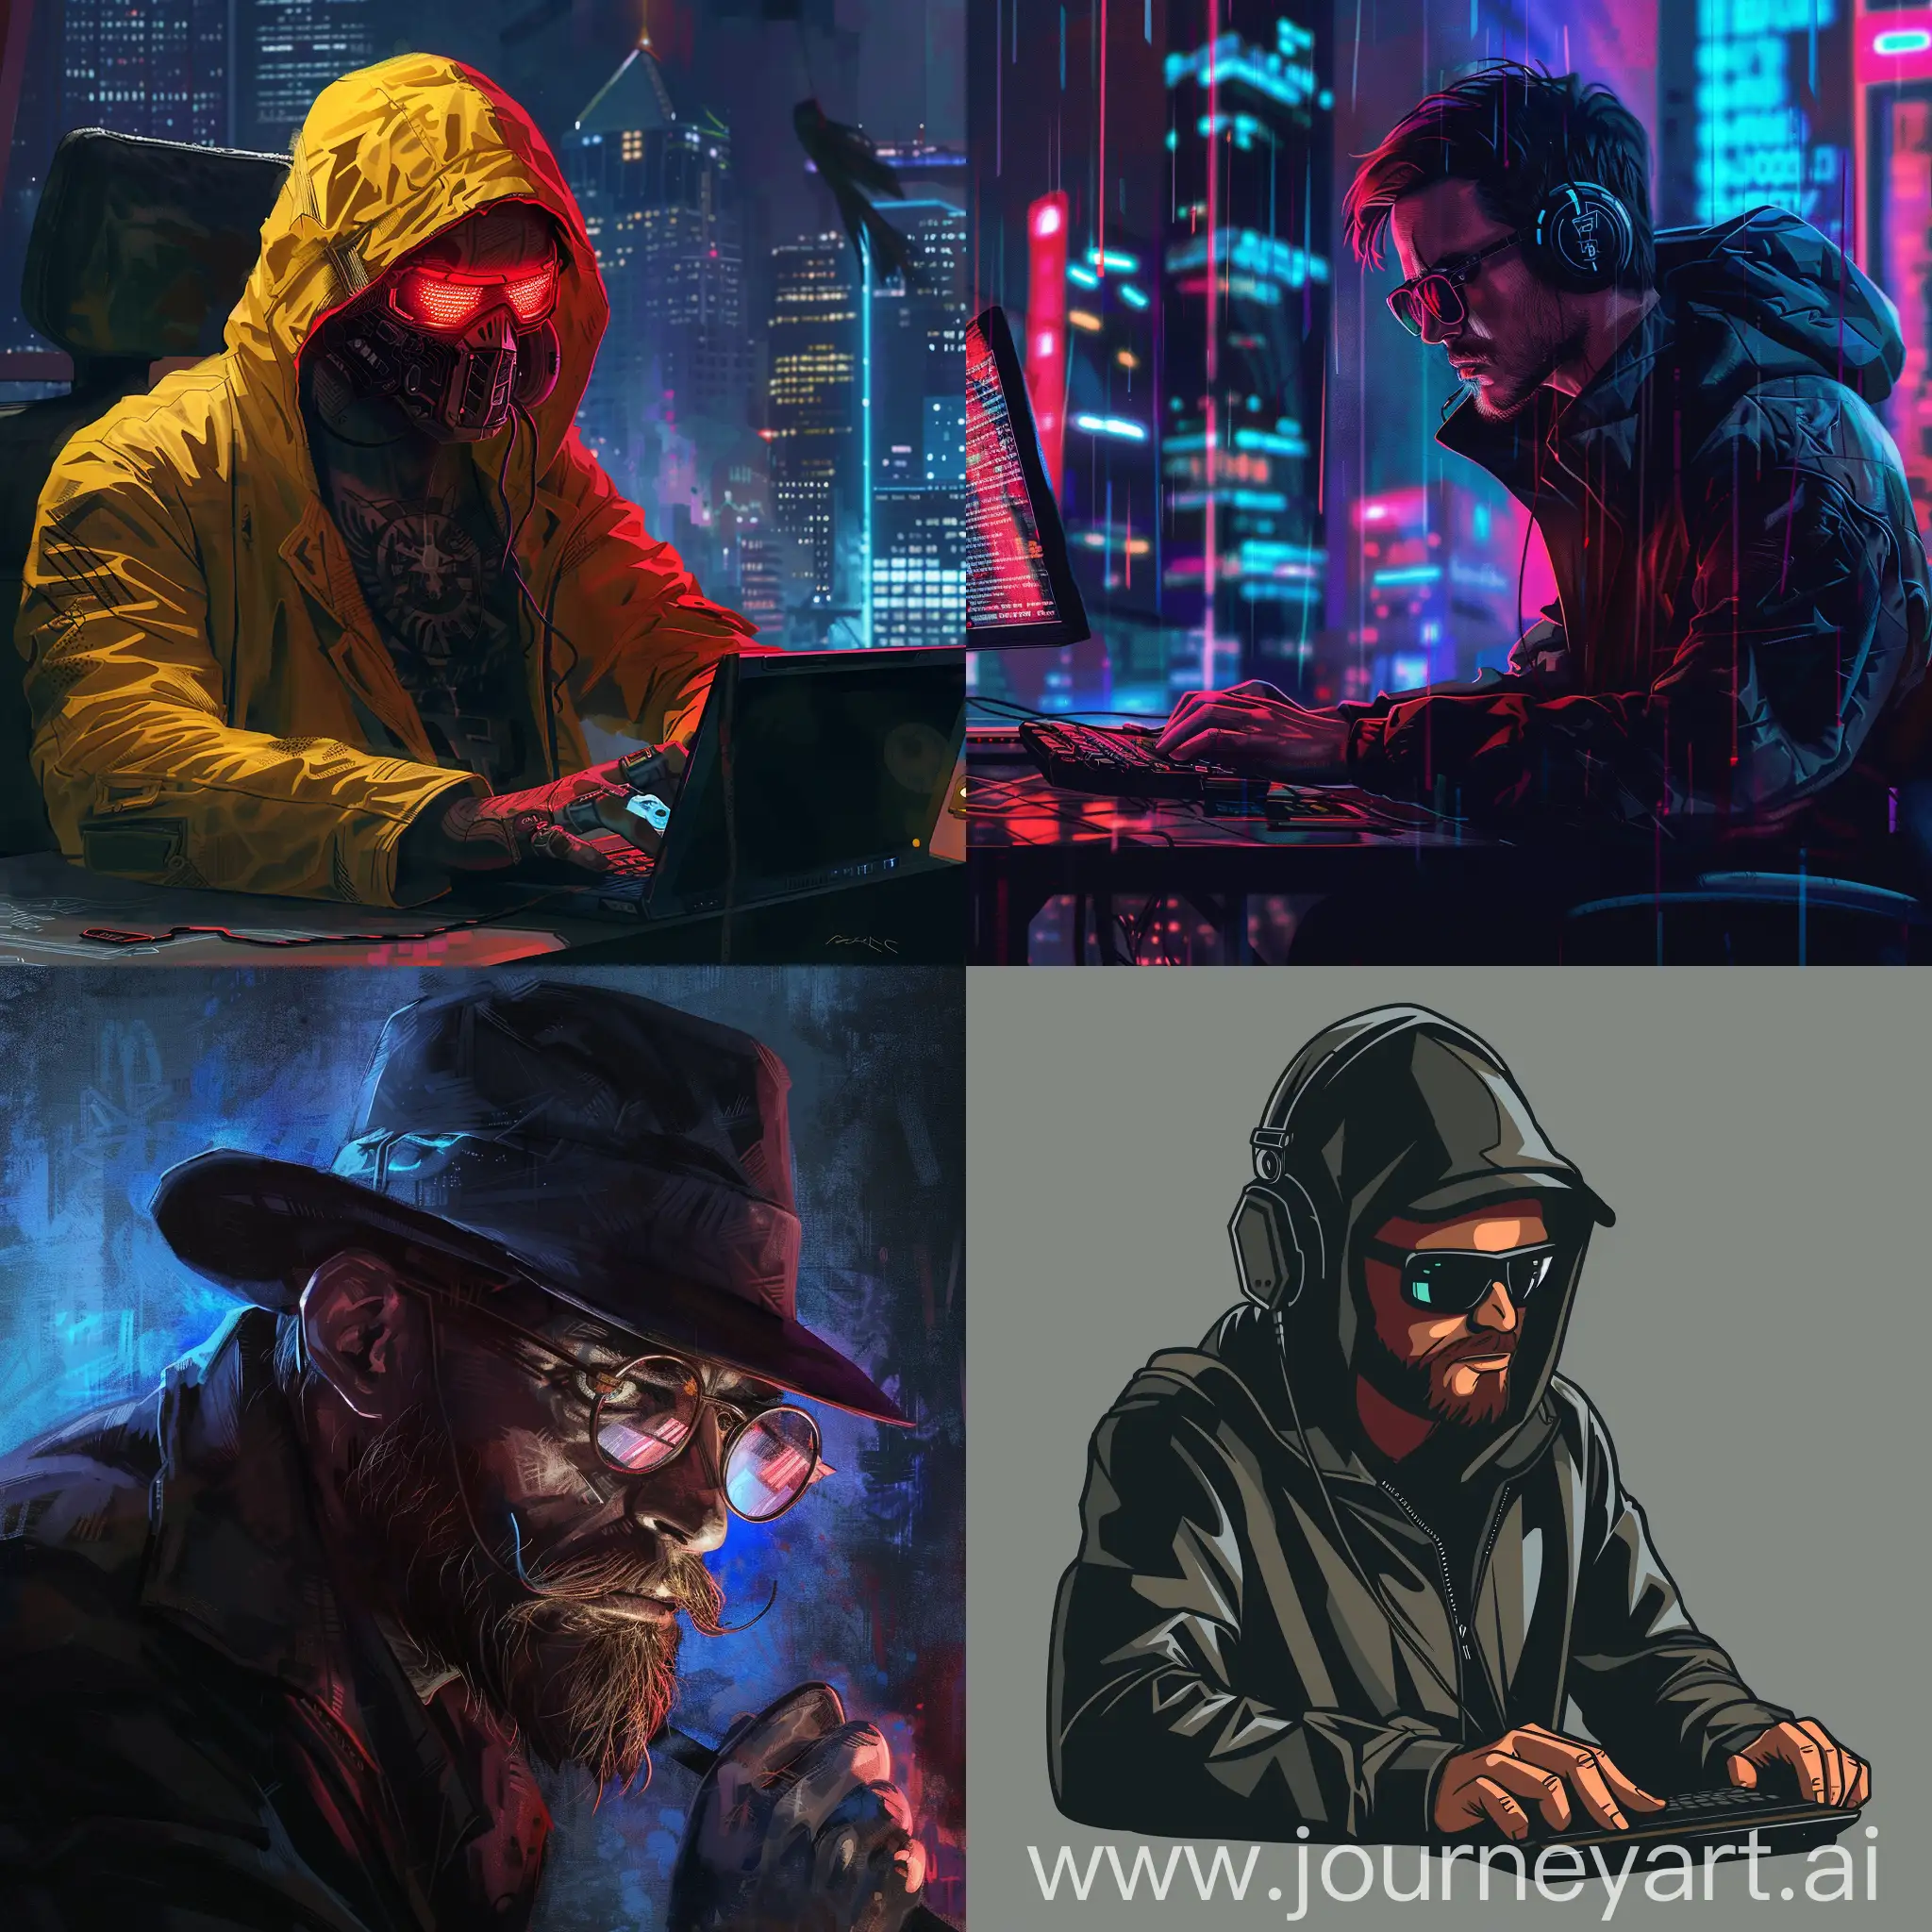 Stylish-Gangster-Programmer-Cool-Digital-Art-with-Version-6-Aesthetics